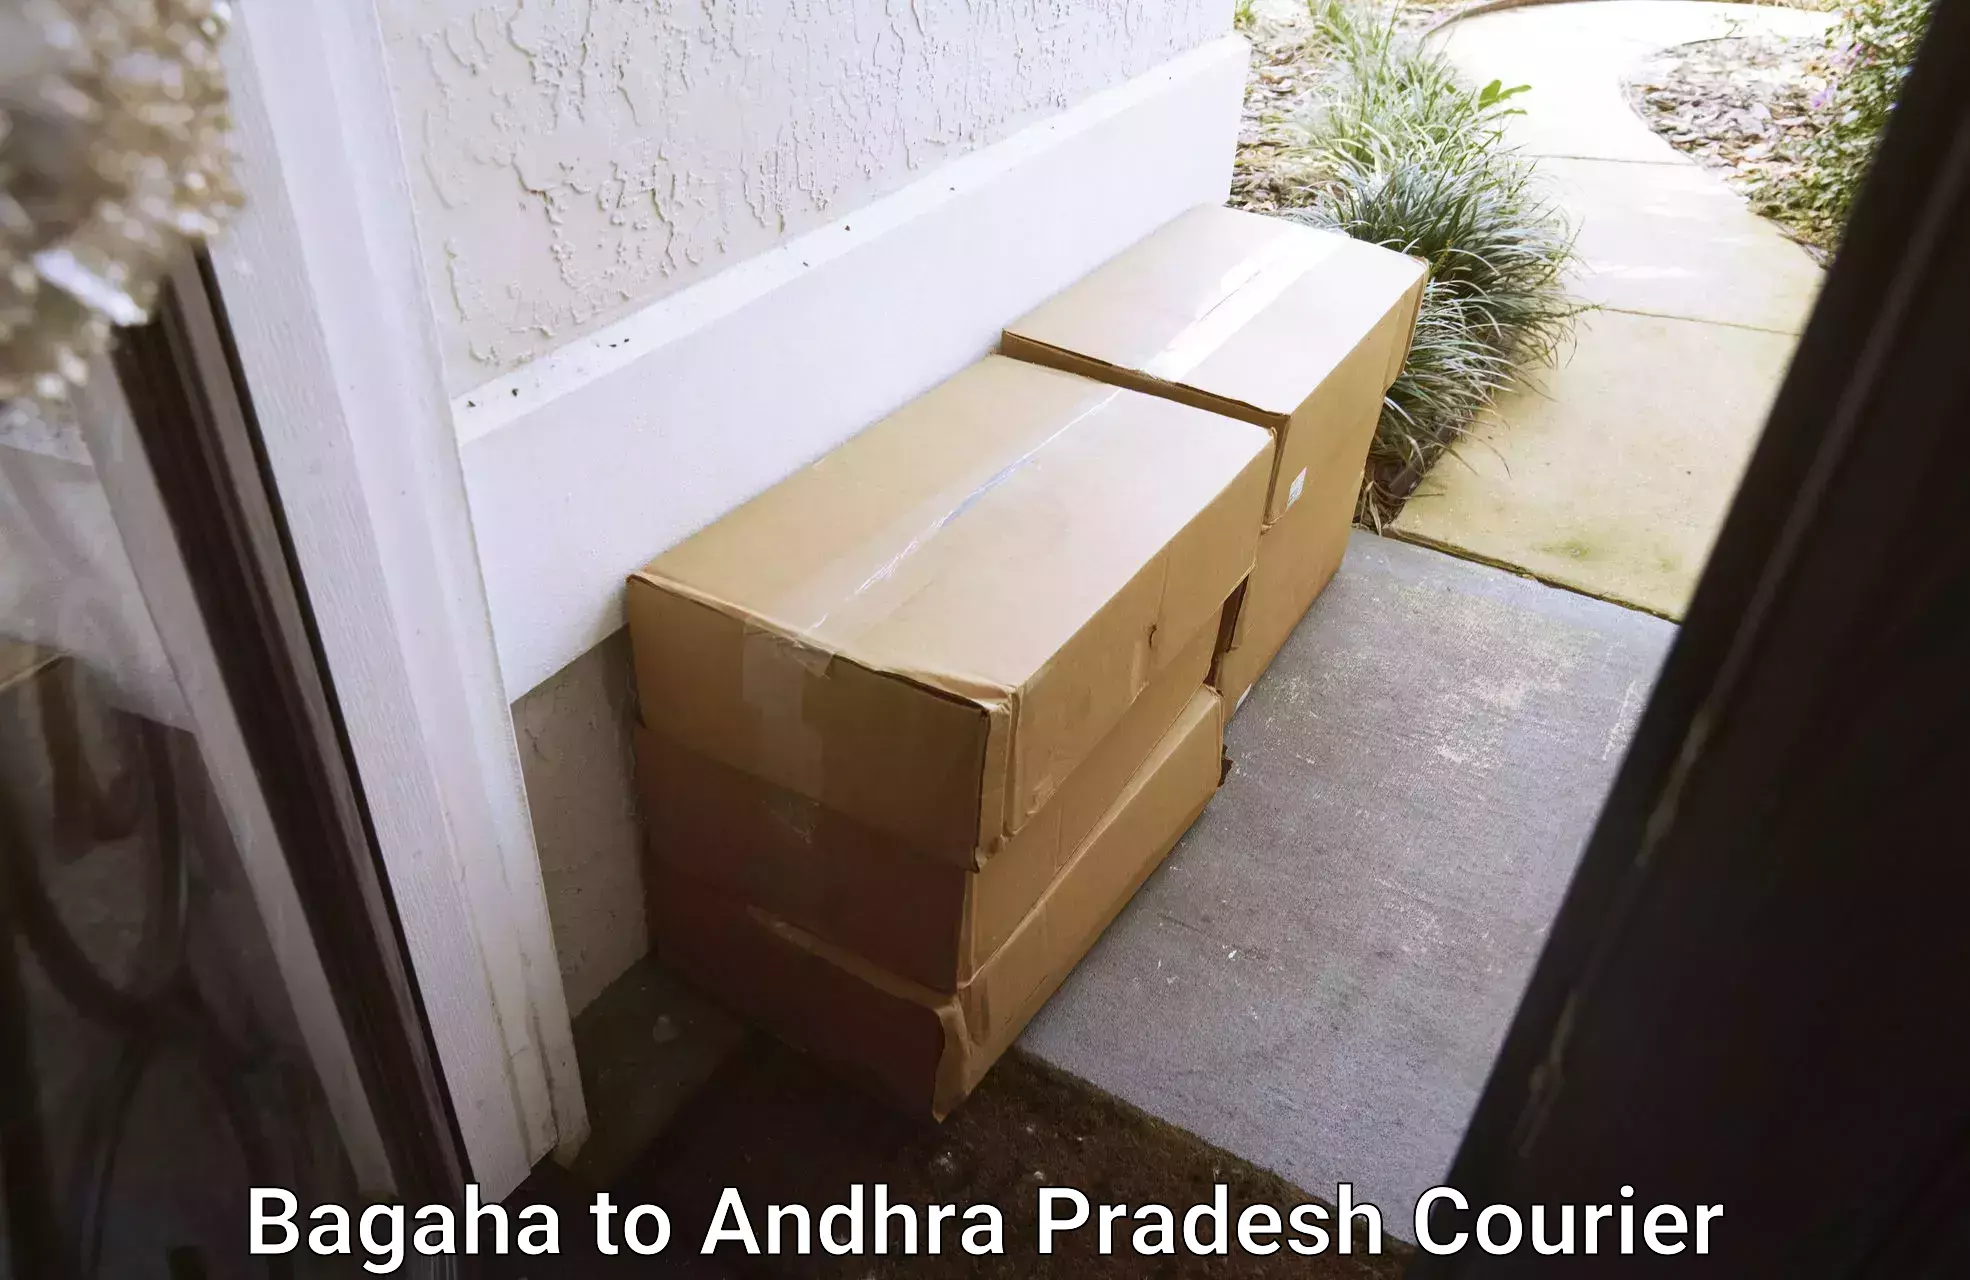 Professional moving company Bagaha to Andhra Pradesh